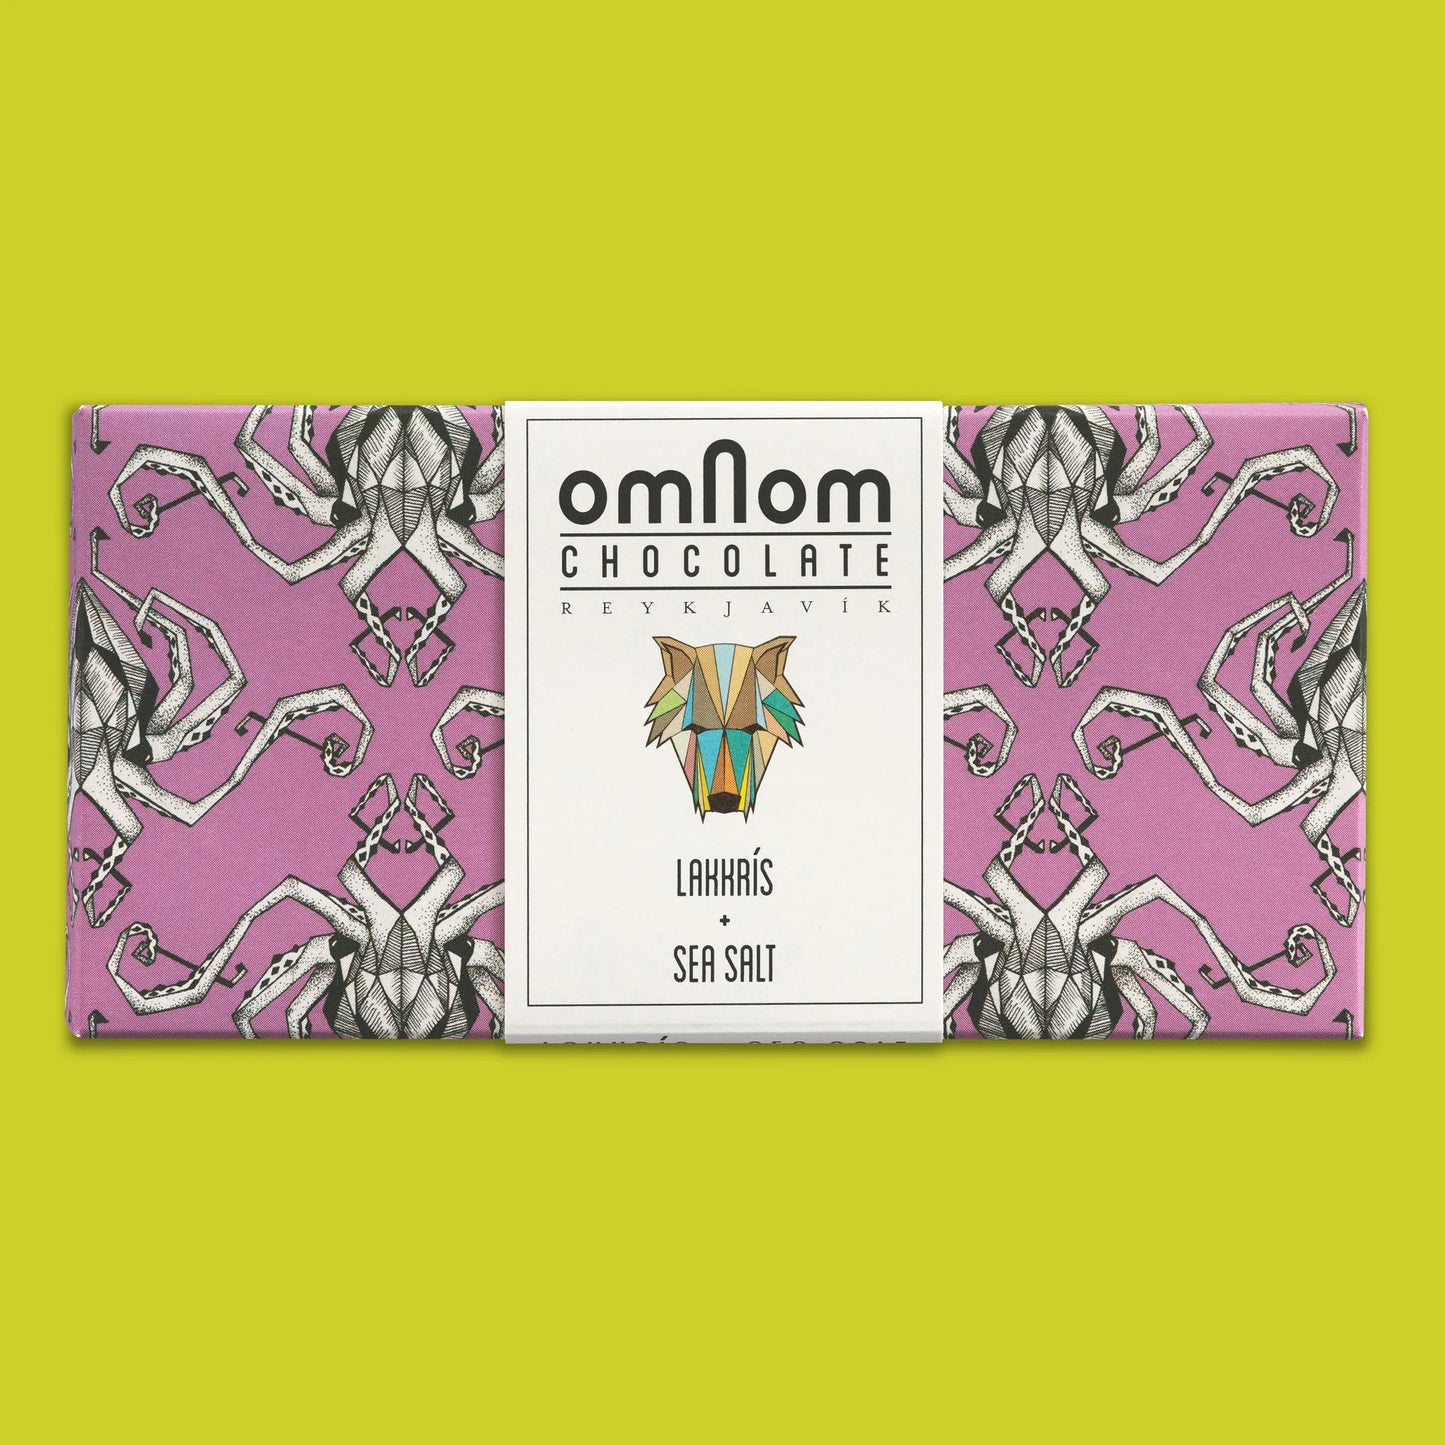 Lakkris and Sea Salt Chocolate Bar by OMNOM